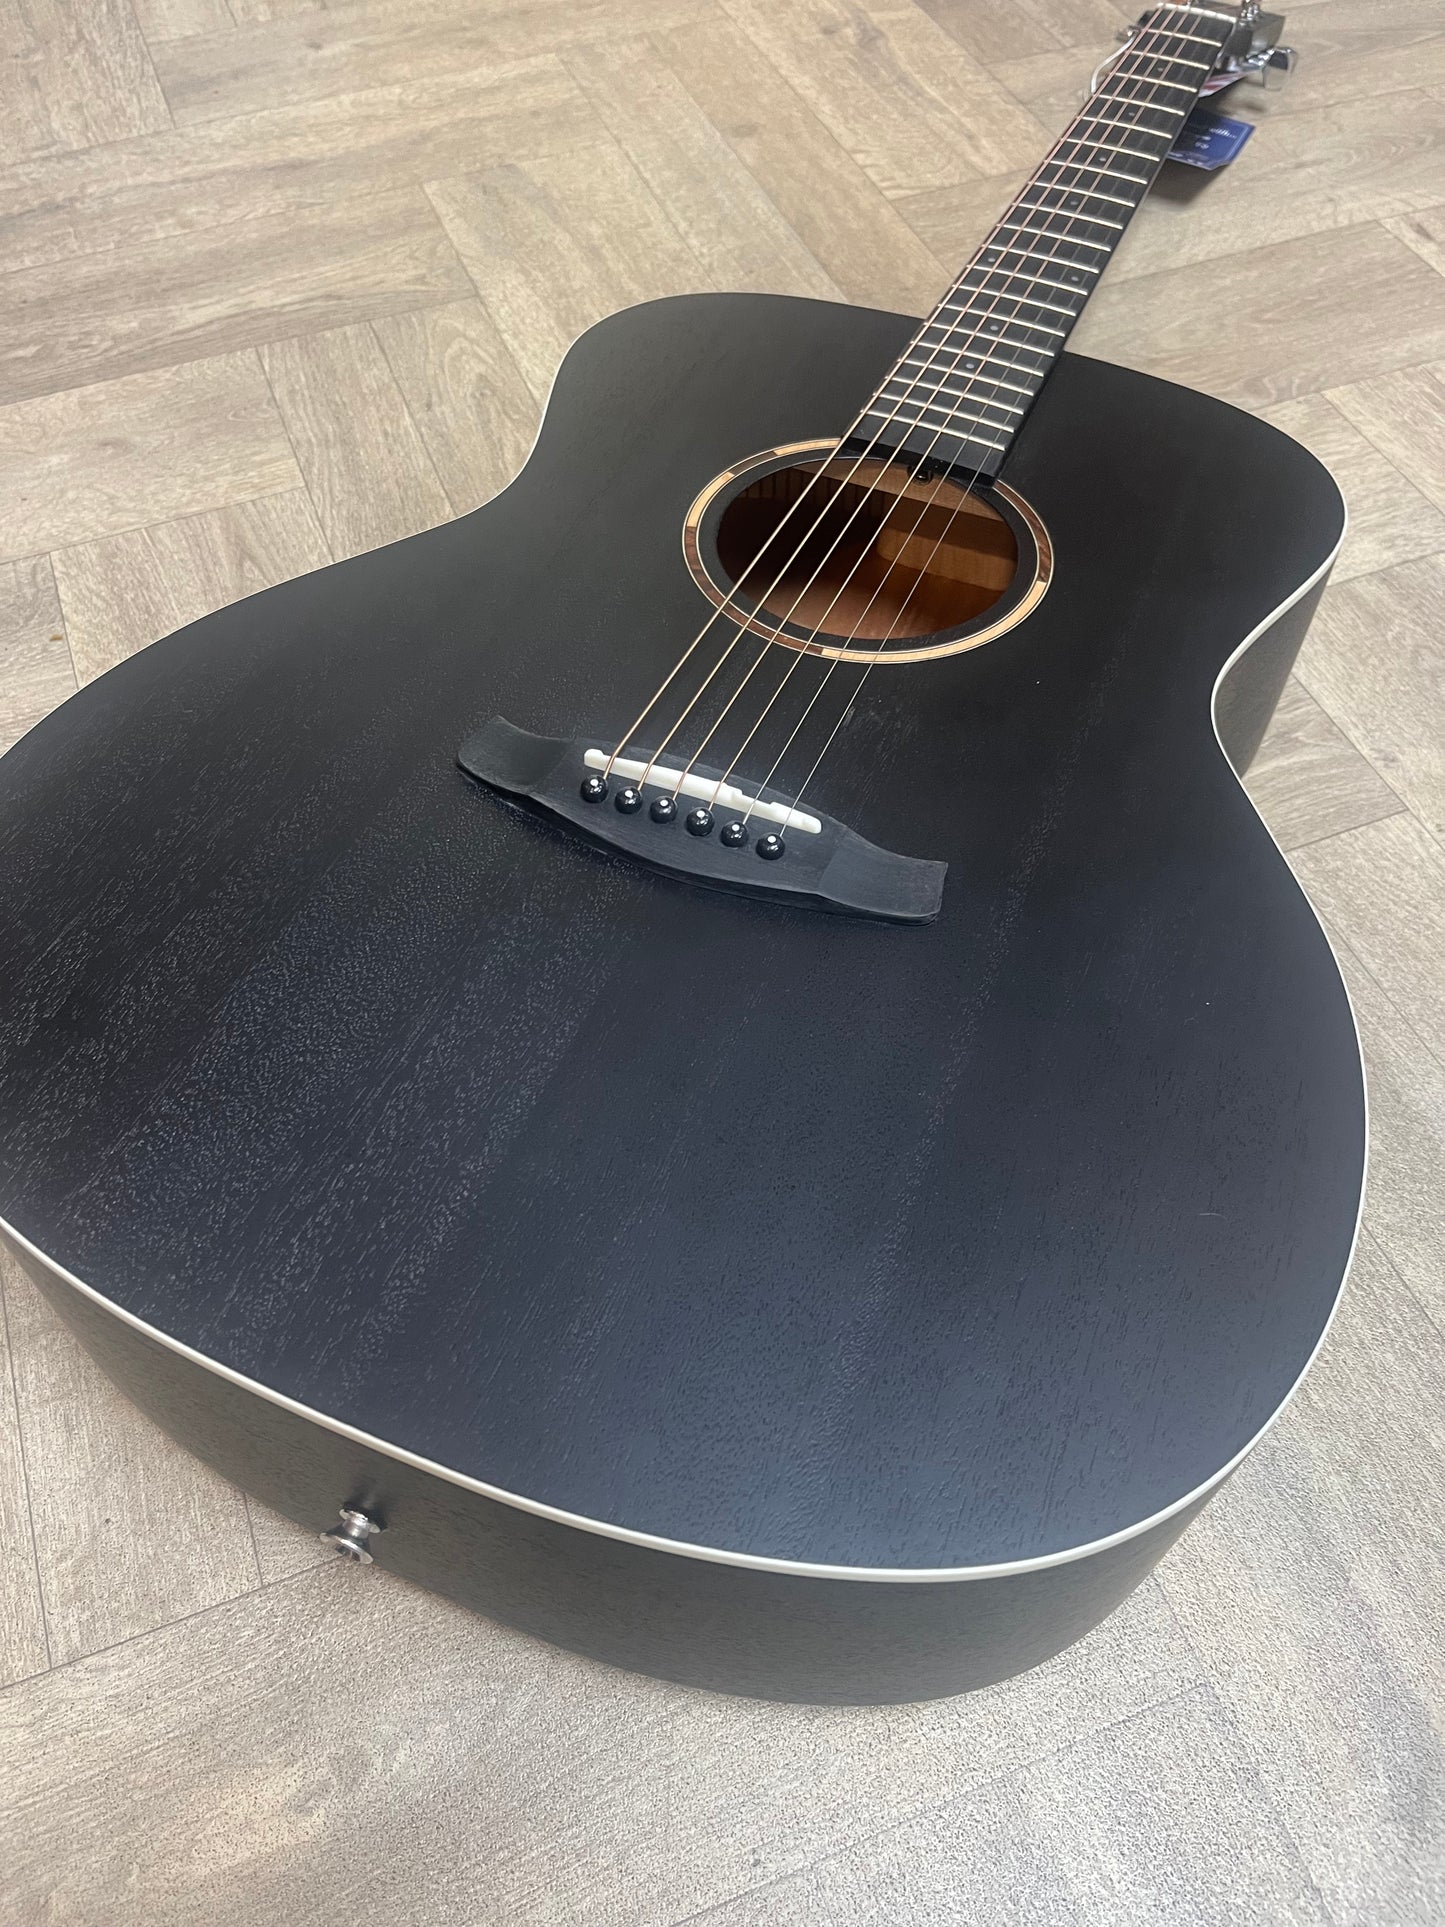 Blackbird Series - Folk shape - Acoustic Guitar